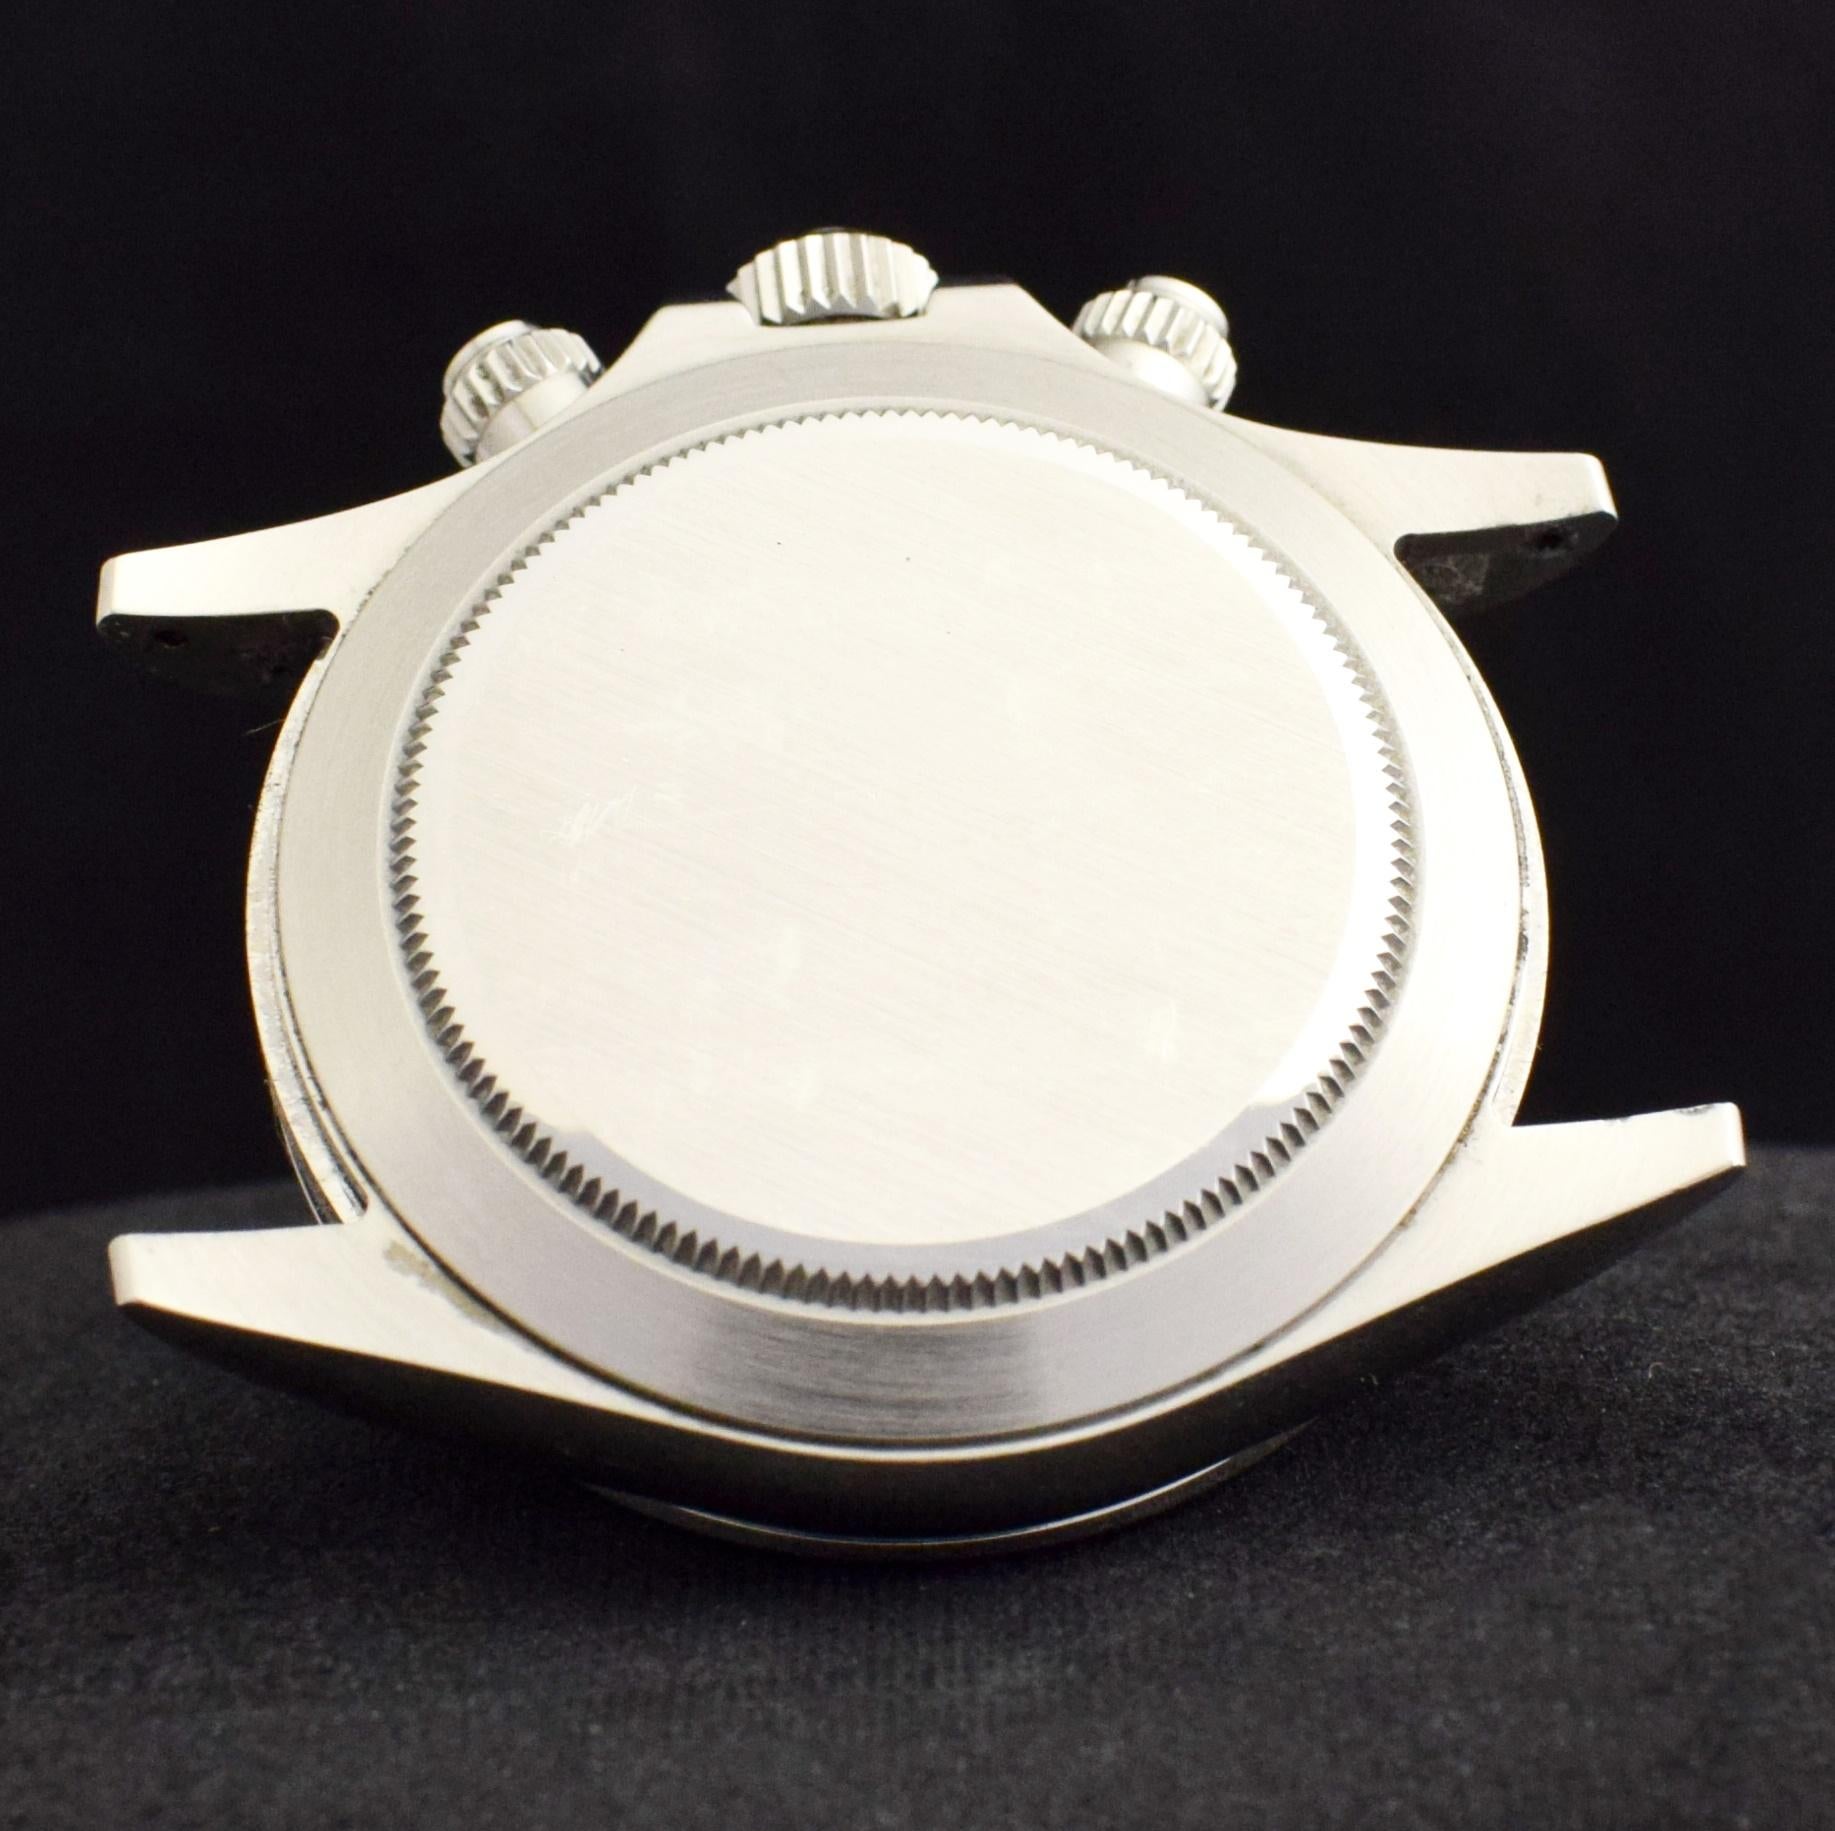 Rolex Daytona Chronograph Black APH Dial 116520 Steel Watch Box & Paper 2012 2